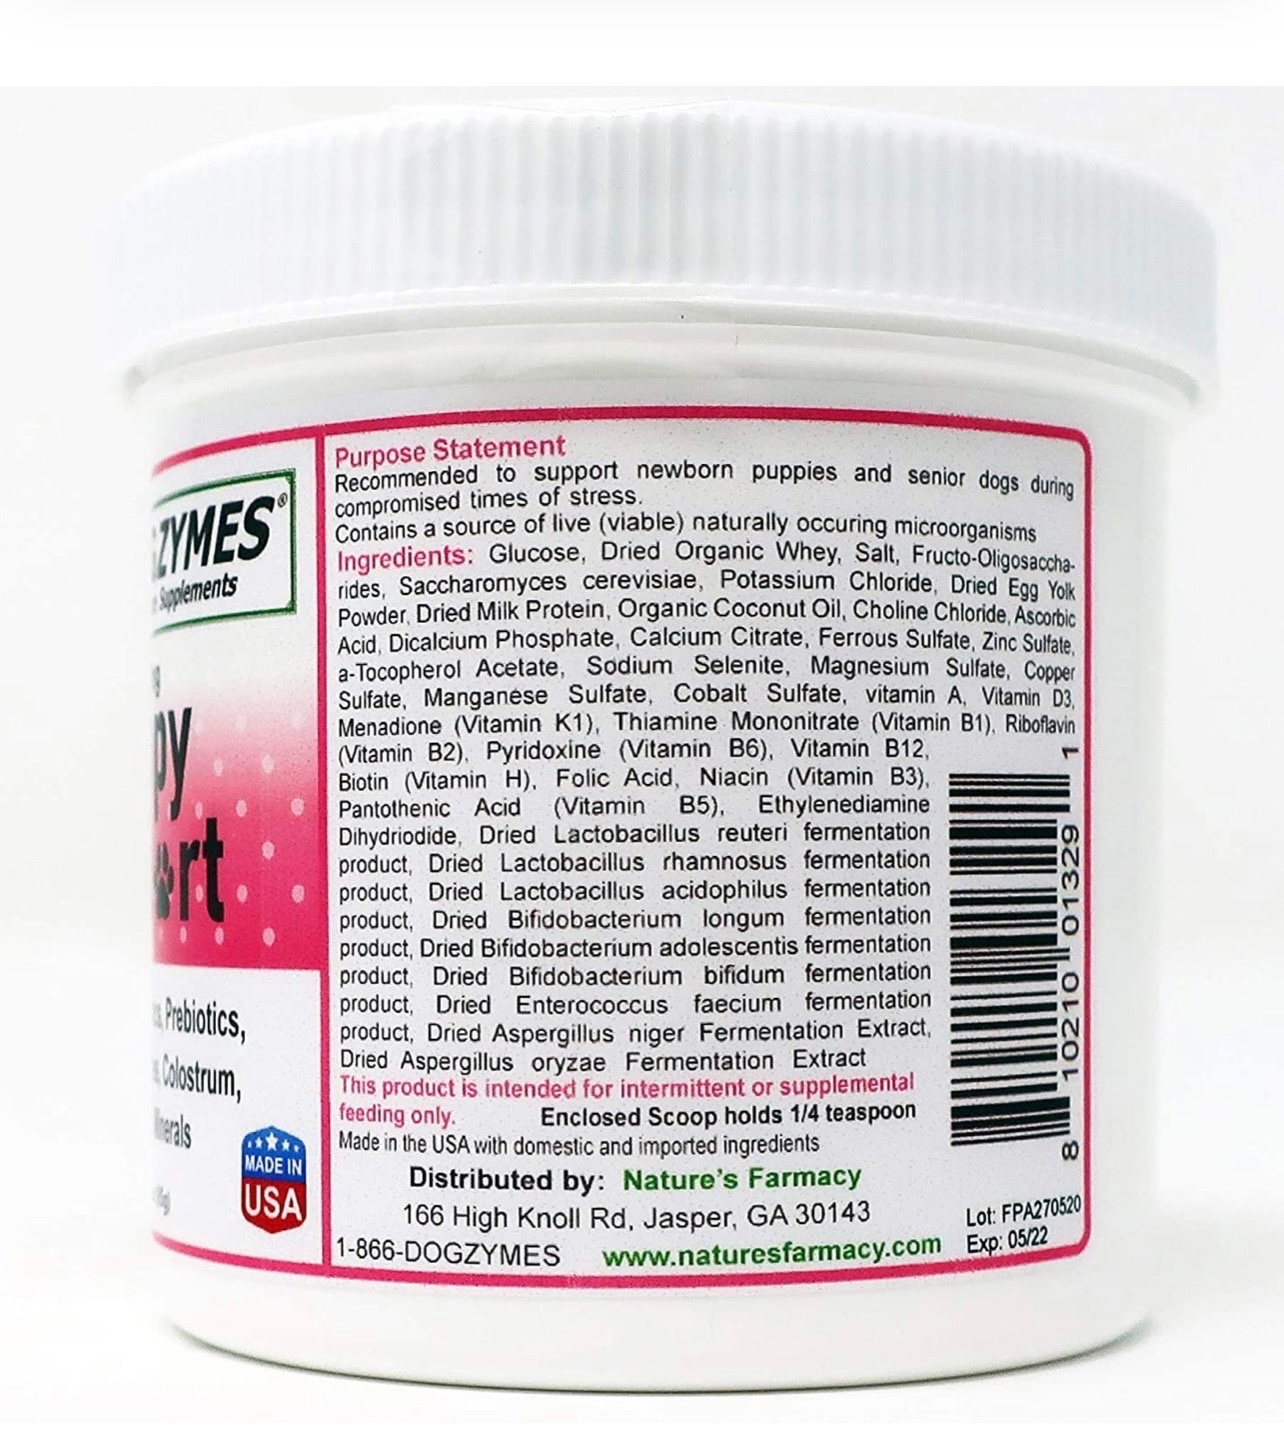 Dogzymes Fading Puppy Support Probiotics Prebiotics Enzymes Glucose Electrolytes Vitamins Minerals Mix (3 oz) - 85 гр, /Добавка для щенков с пробиотиками и пребиотиками . (США)